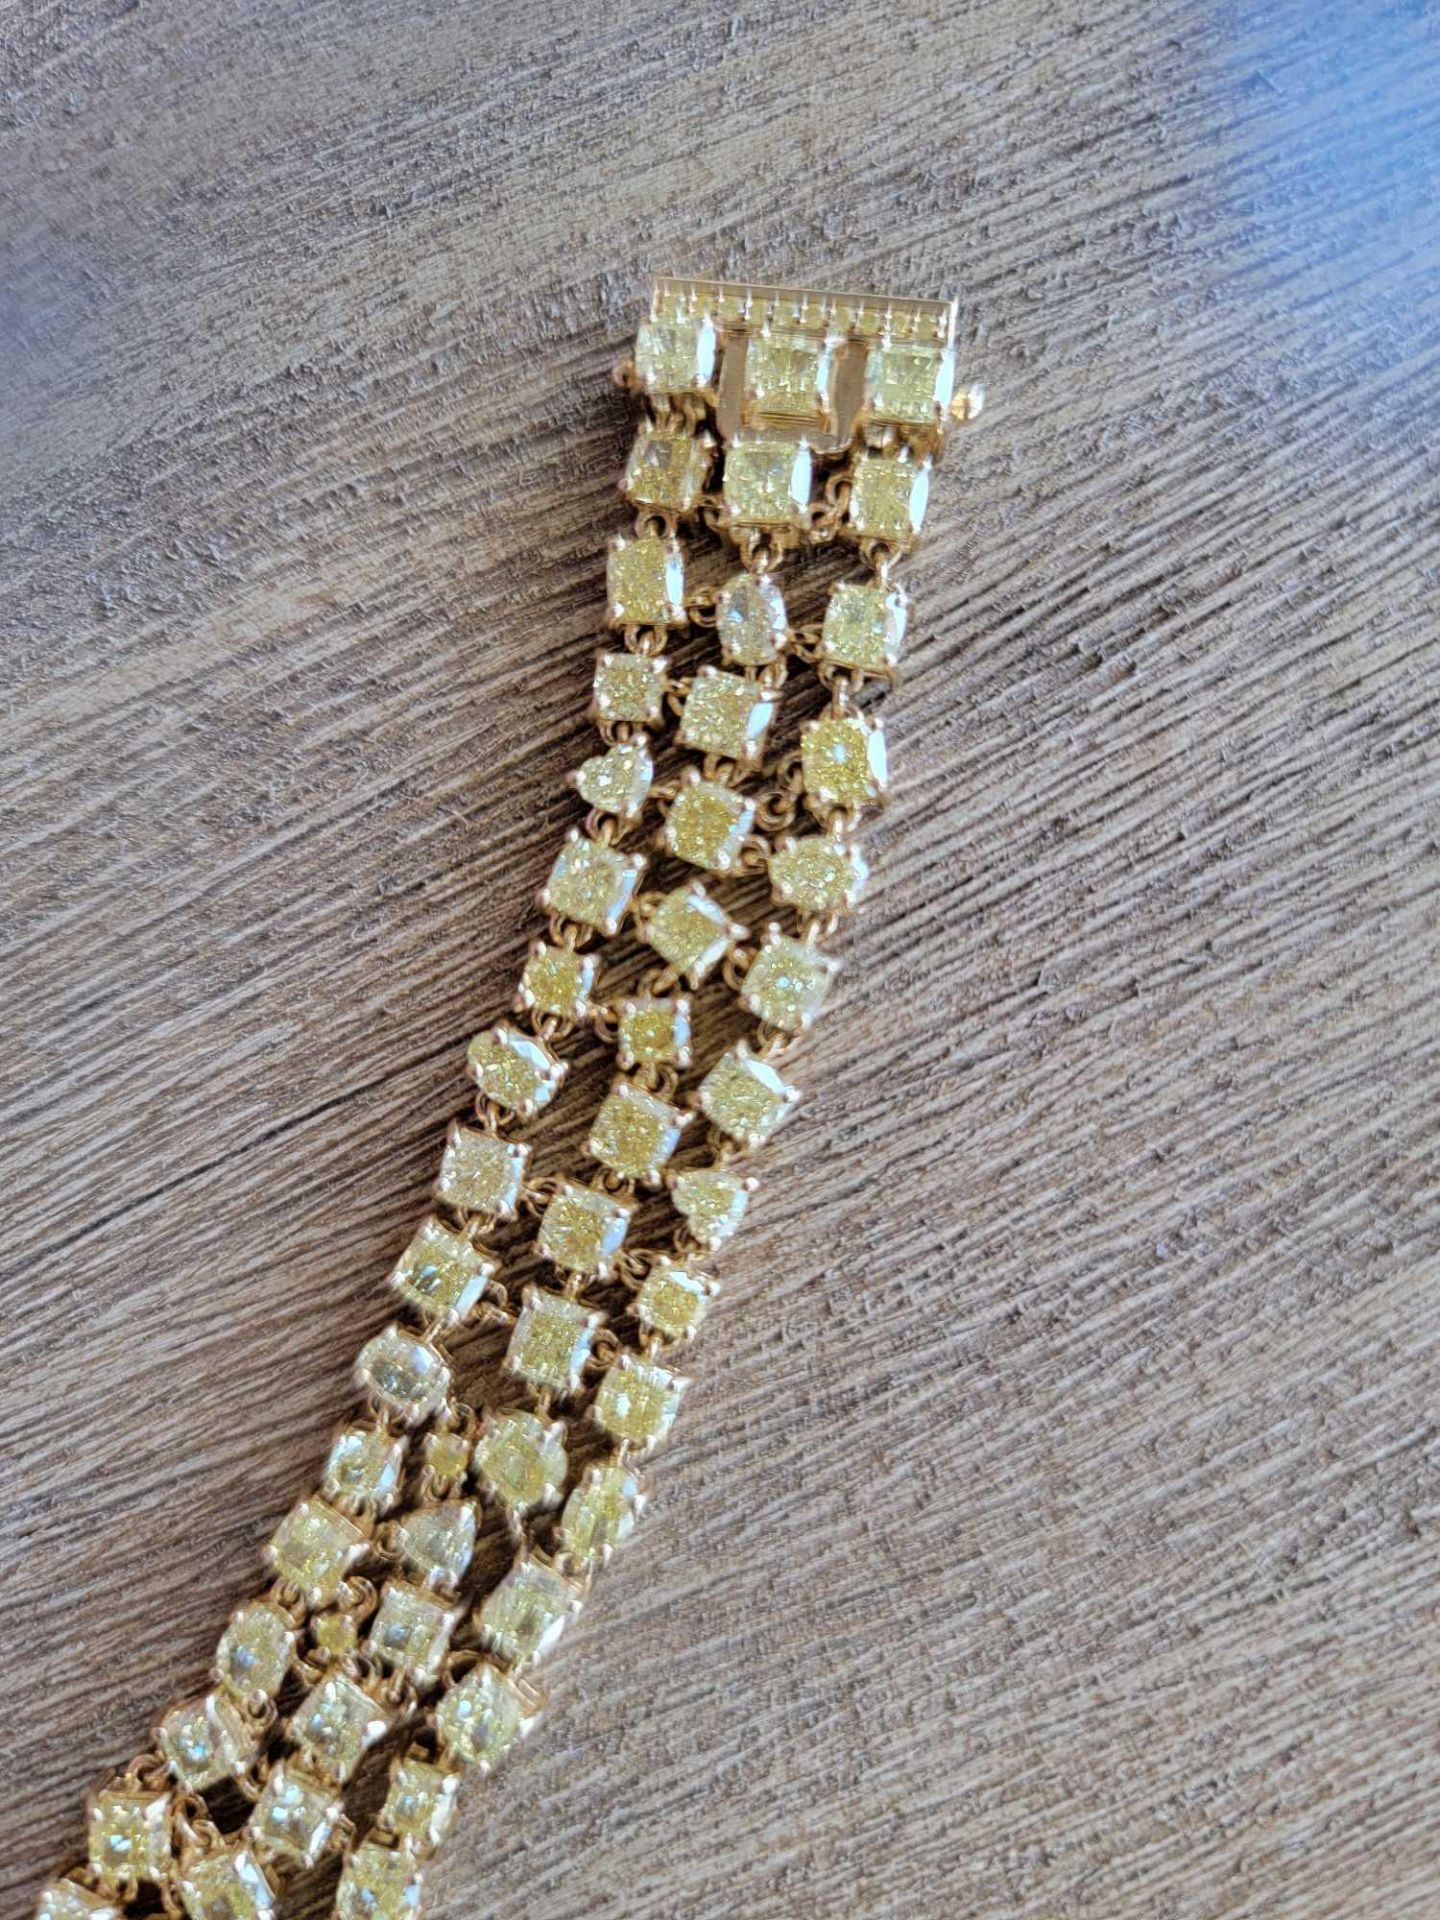 18KT Gold, 30 Carat Intense (canary) yellow diamond bracelet - Image 10 of 21